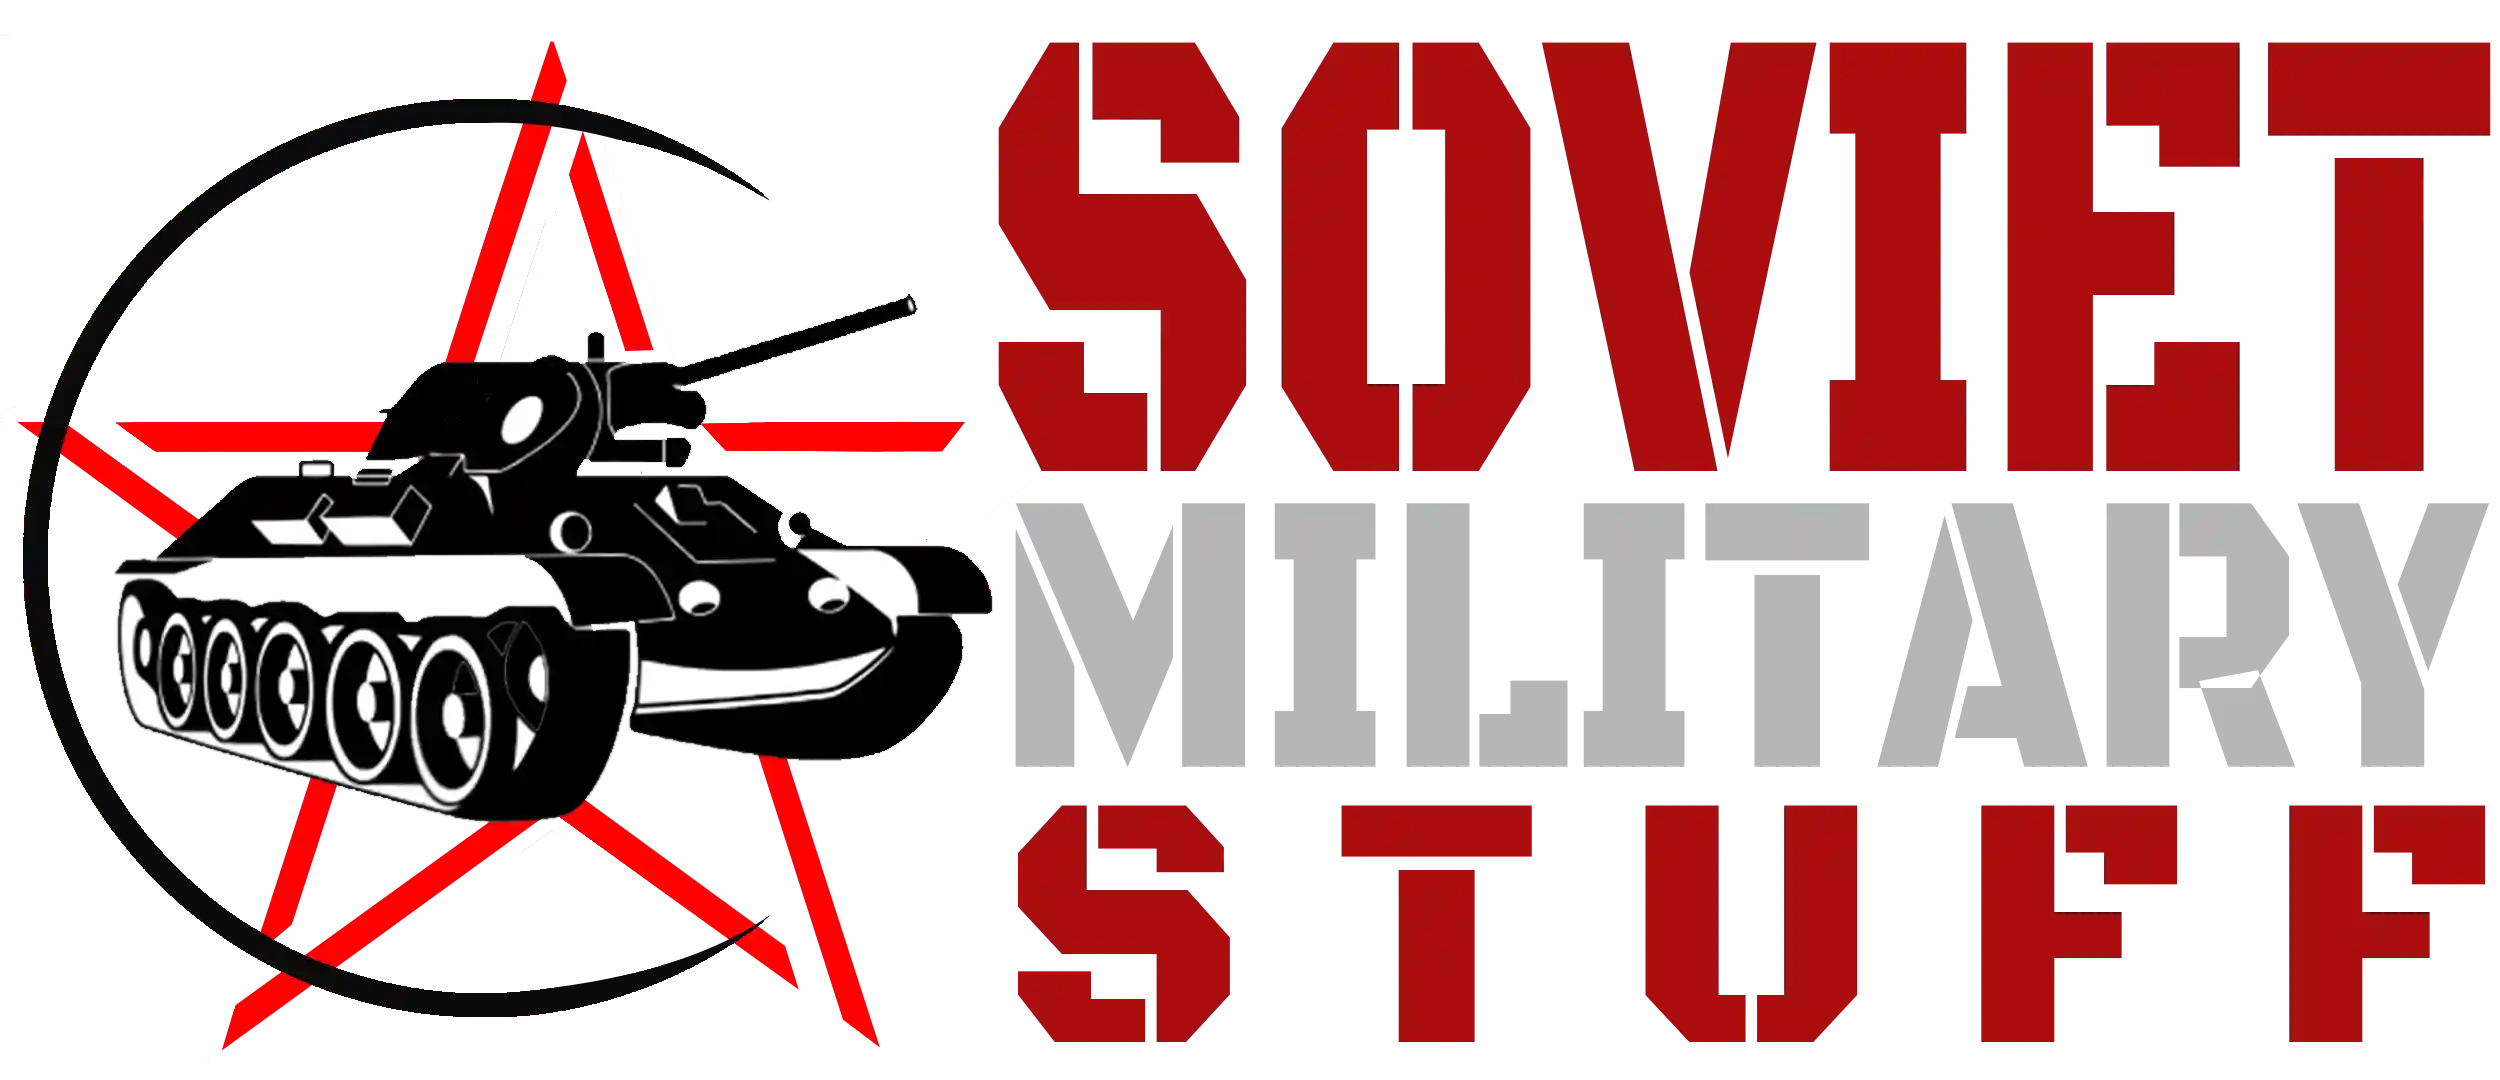 sovietmilitarystuff.com